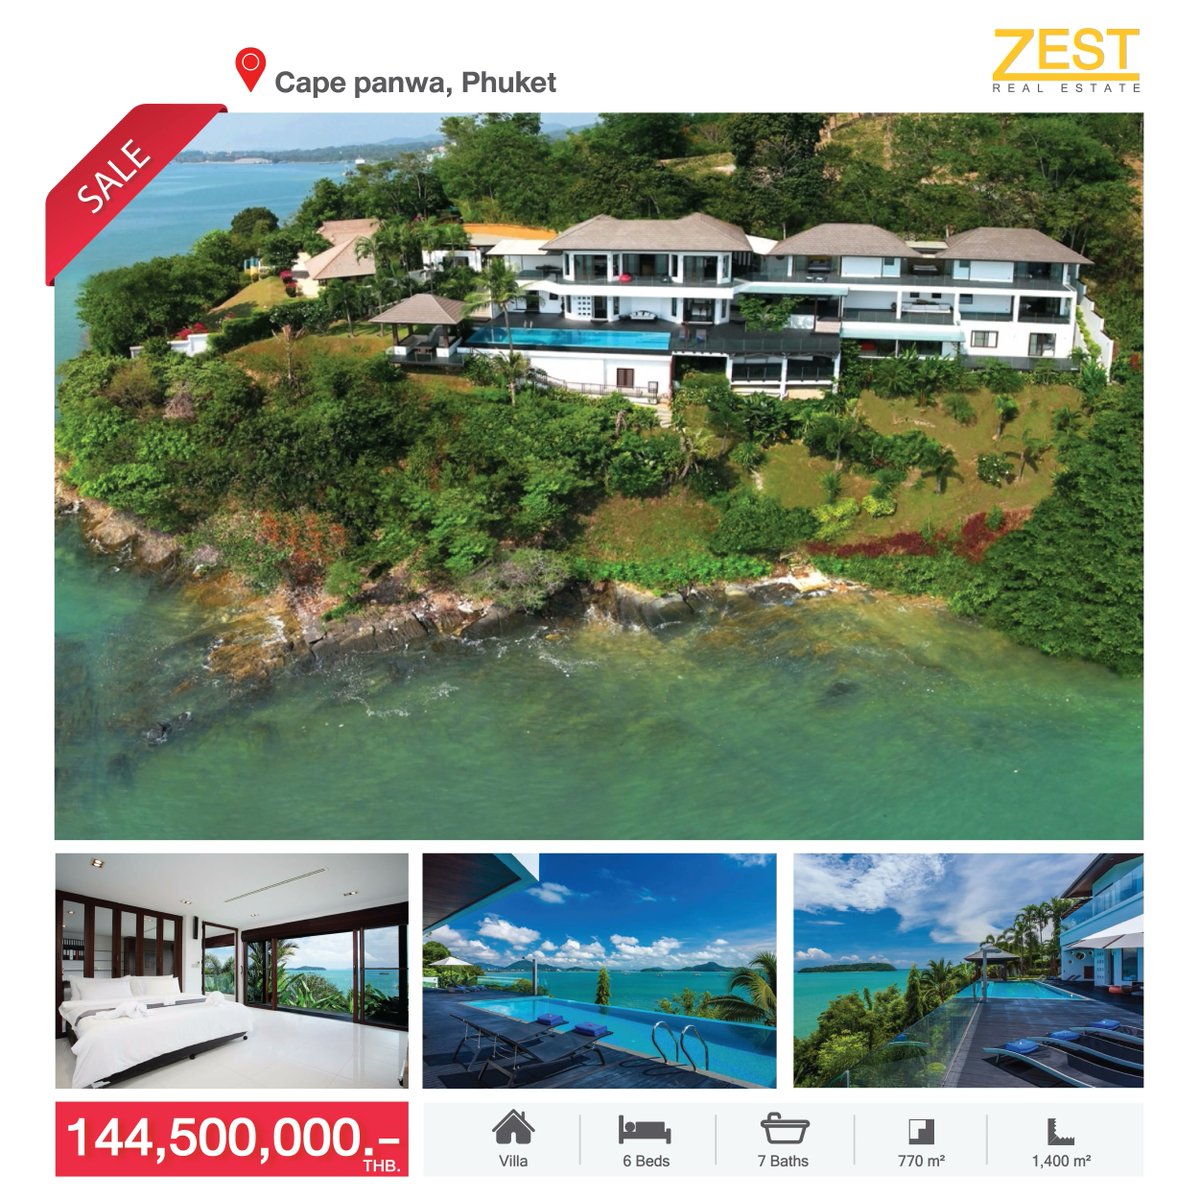 Villa for sale in Cape panwa, Phuket
6 Beds/ 7 Baths/ 770 sqm.

144,500,000 THB.
buff.ly/42JgP62 

#zestrealestate #zestphuket  #luxuryvillas  #PhuketVillas #villainphuket #villaforsale #PropertylnPhuket